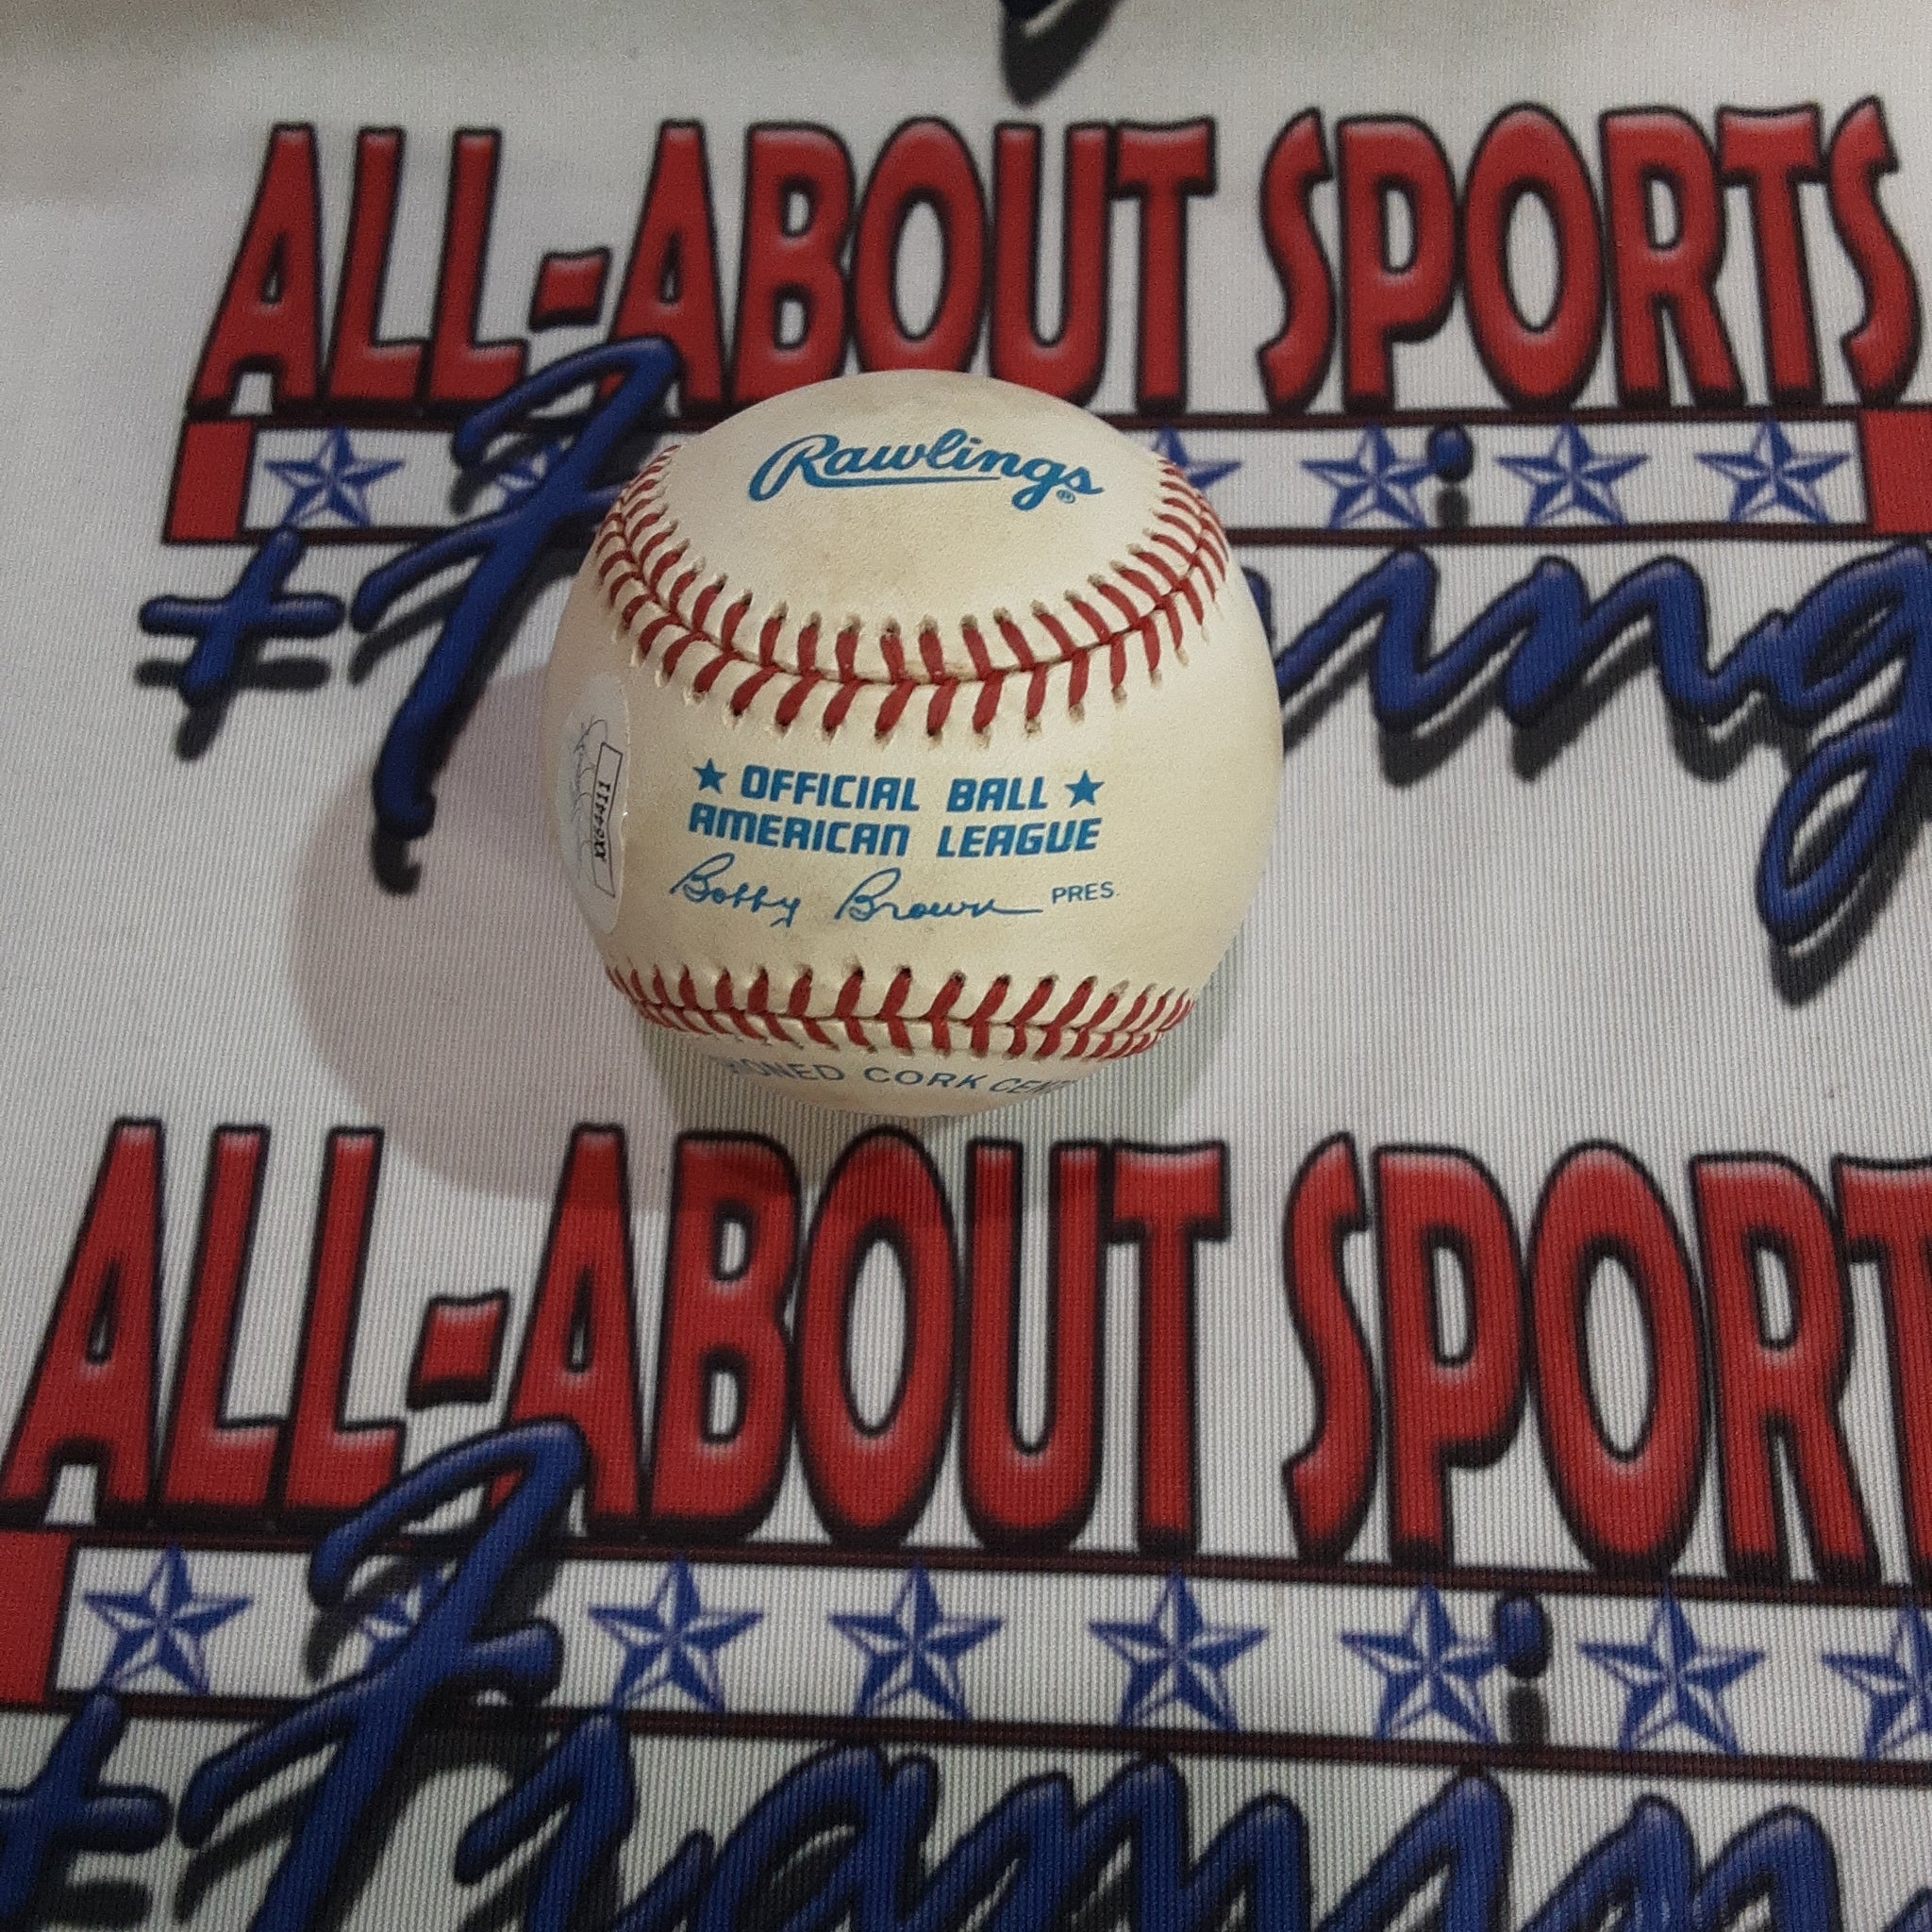 Mickey Mantle Authentic Signed Baseball Autographed JSA/LOA.